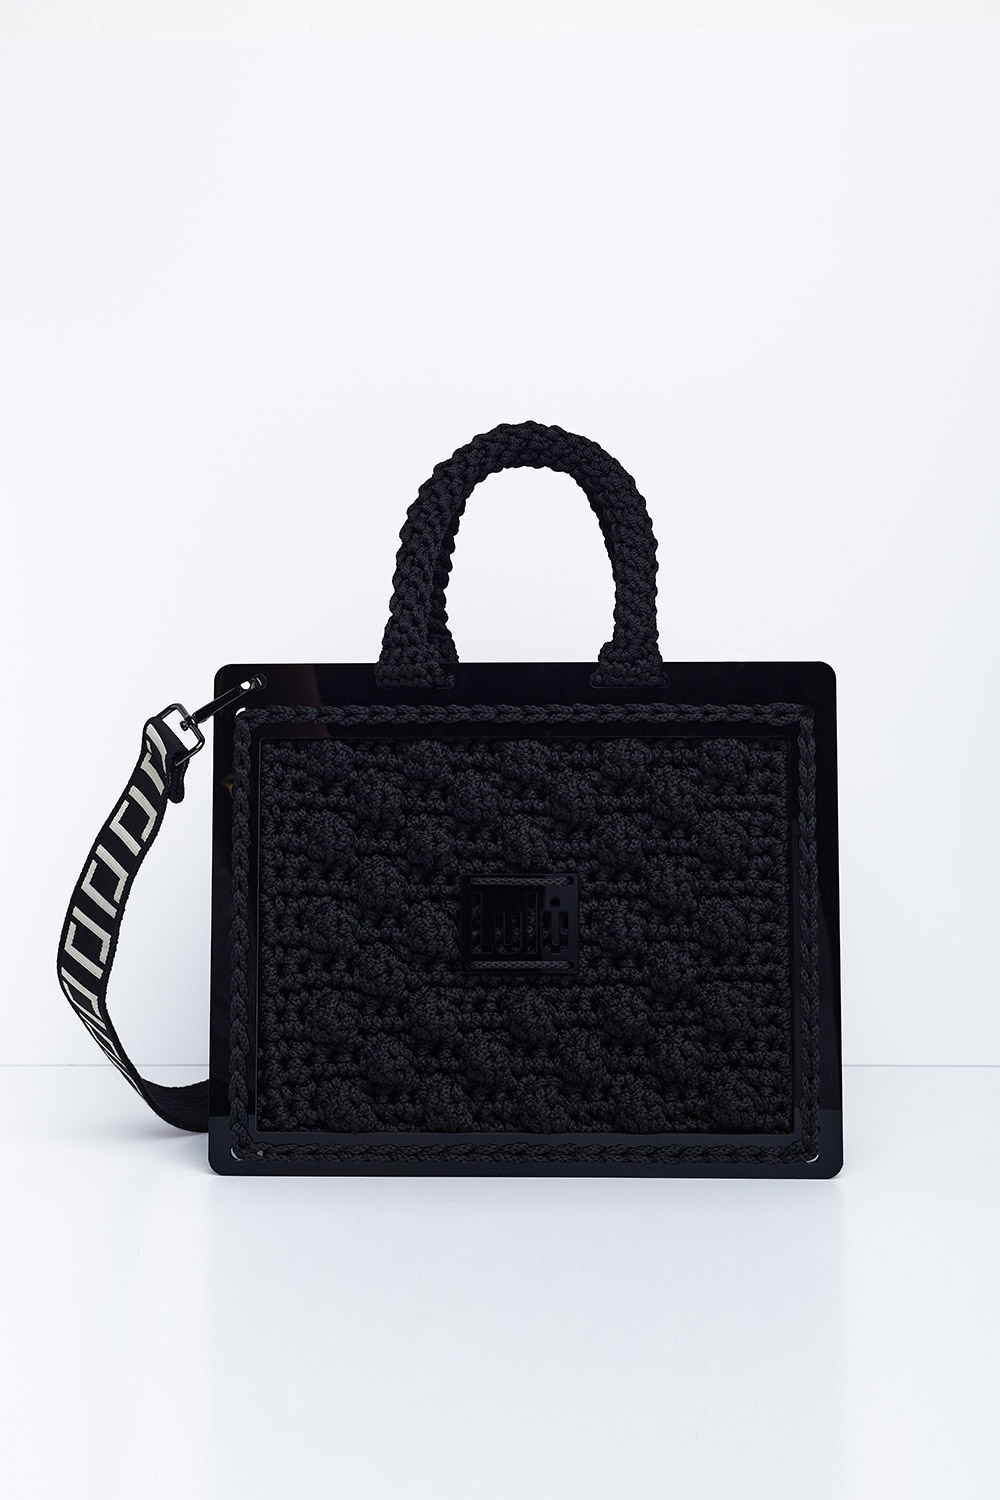 500 P/L Plexiglass Bag in black